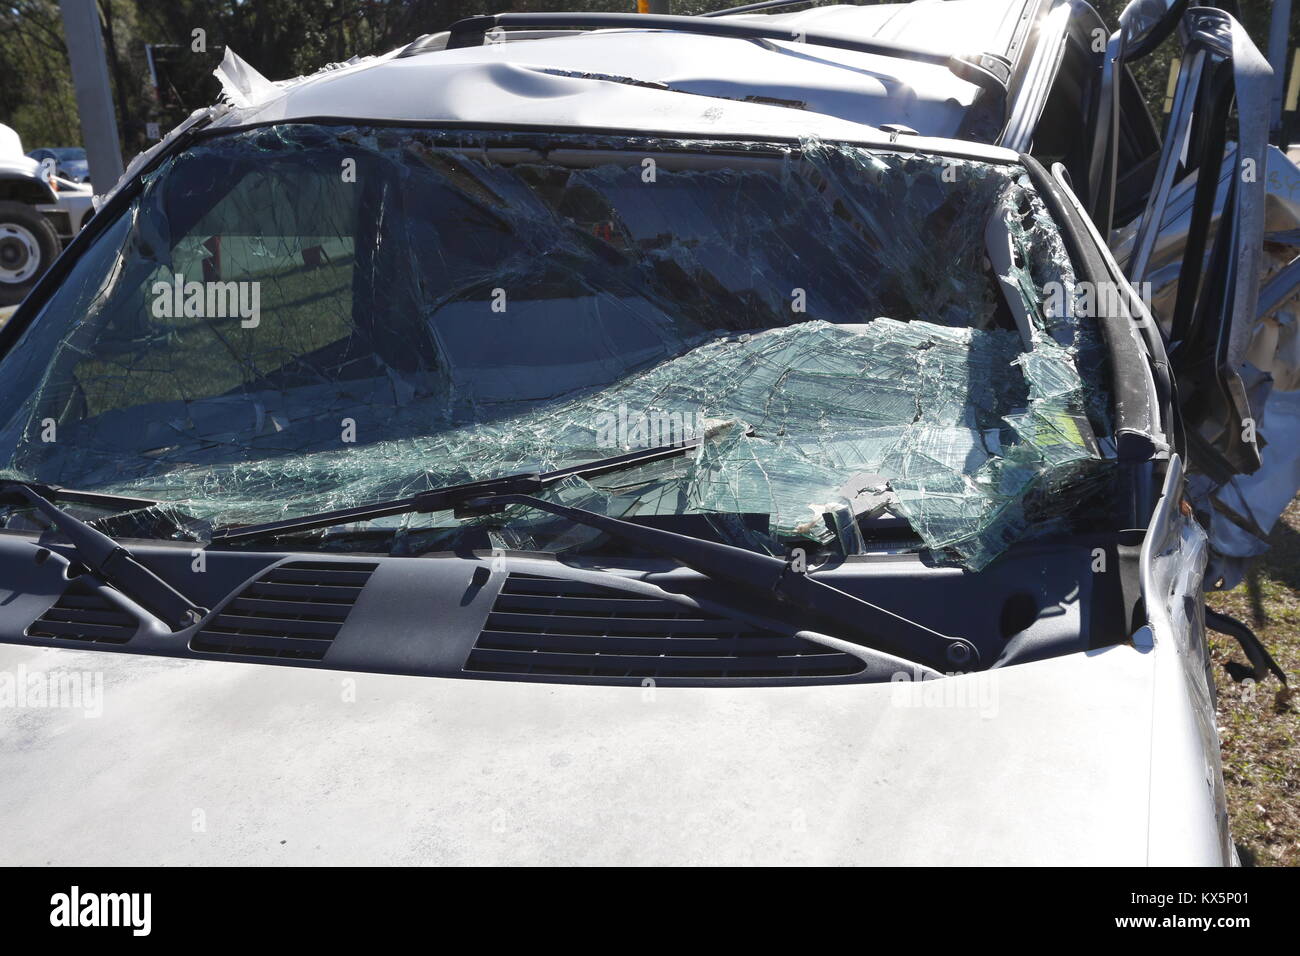 Car crash hi-res stock photography and images - Alamy